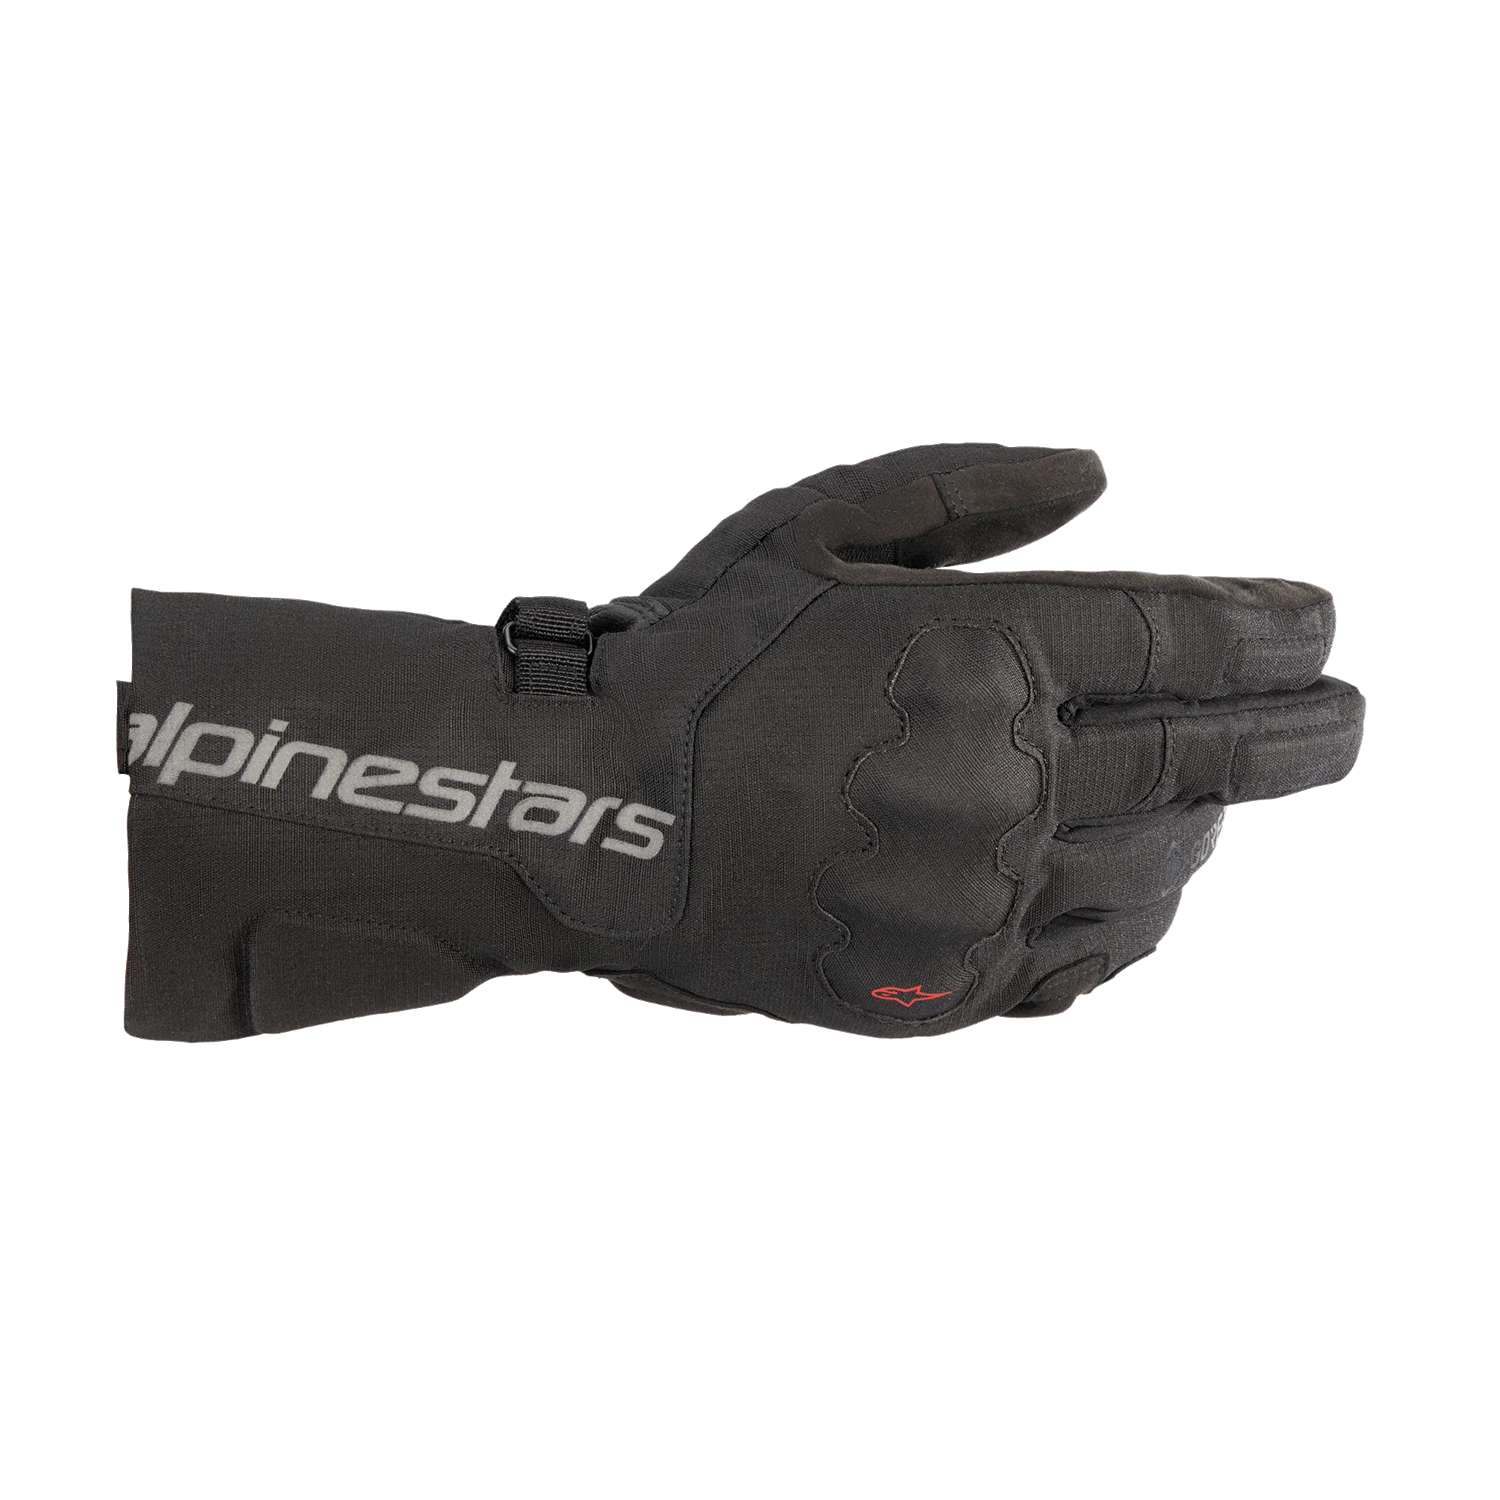 Image of Alpinestars Wr-X Gore-Tex Gloves Black Size 2XL ID 8059347243658